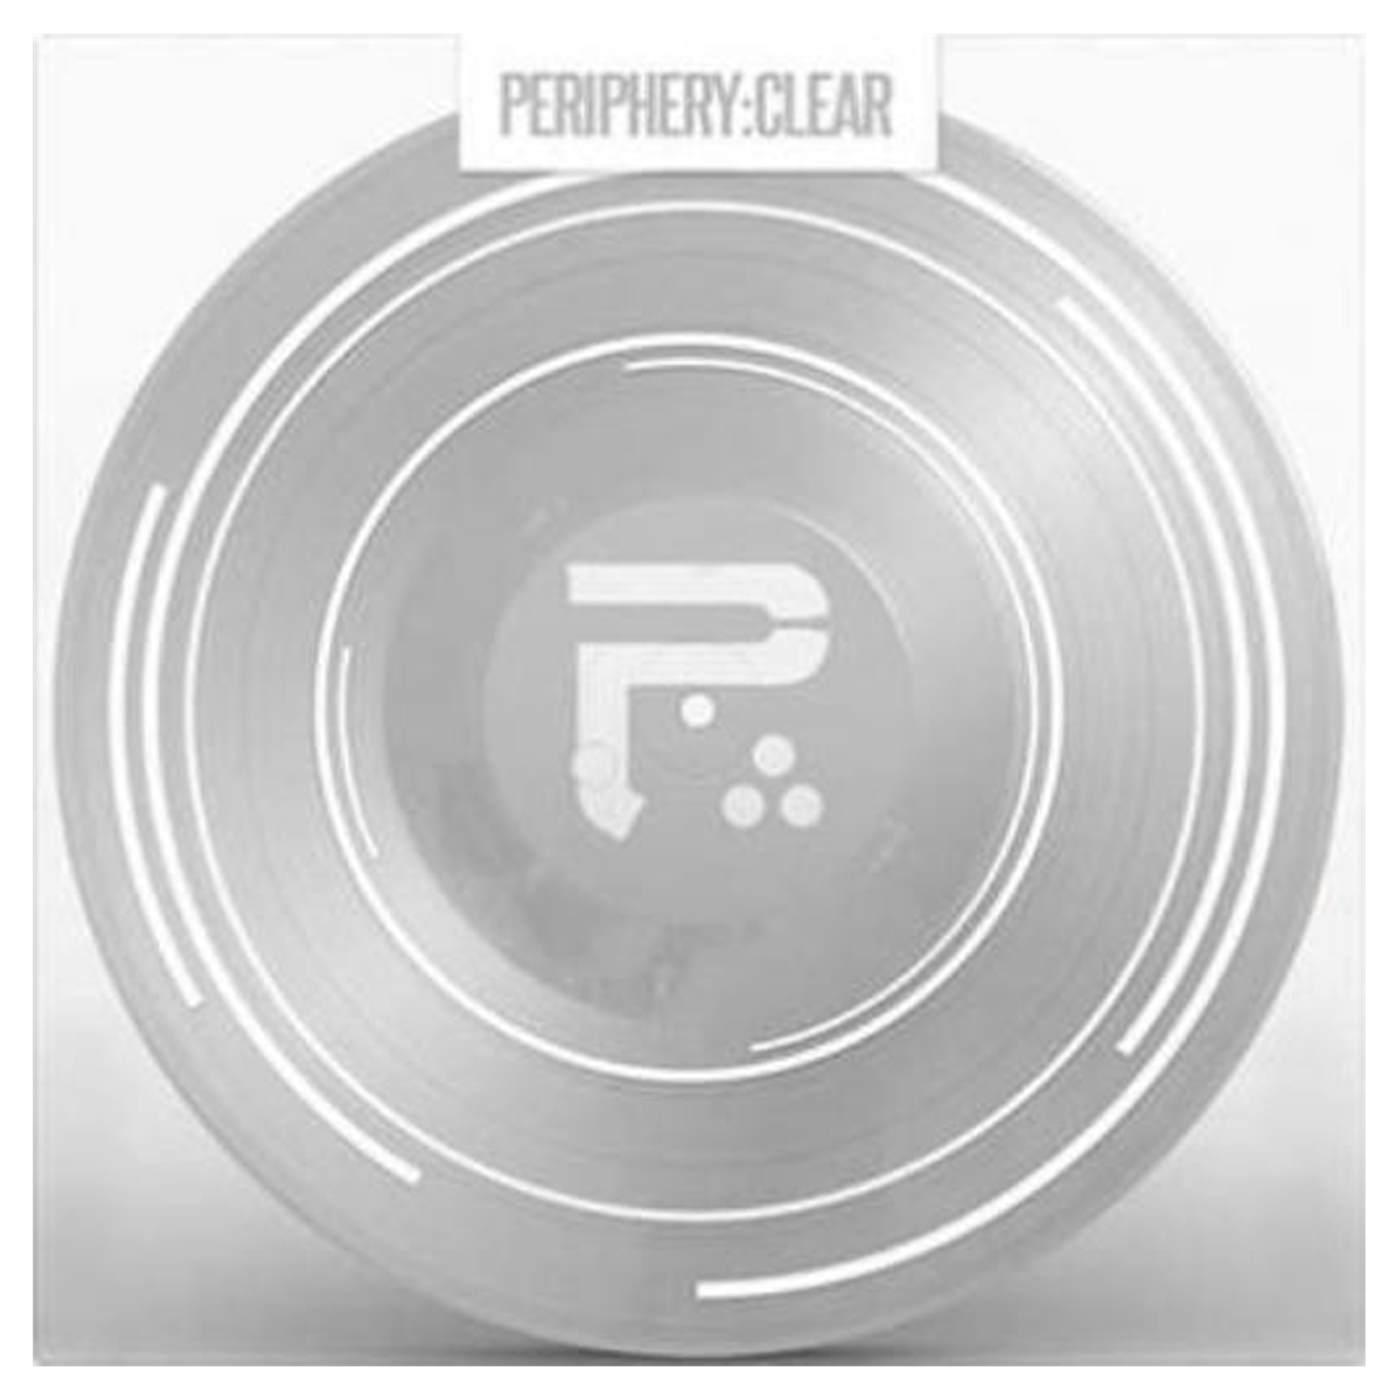 PERIPHERY - 'Clear EP' LP (Vinyl)